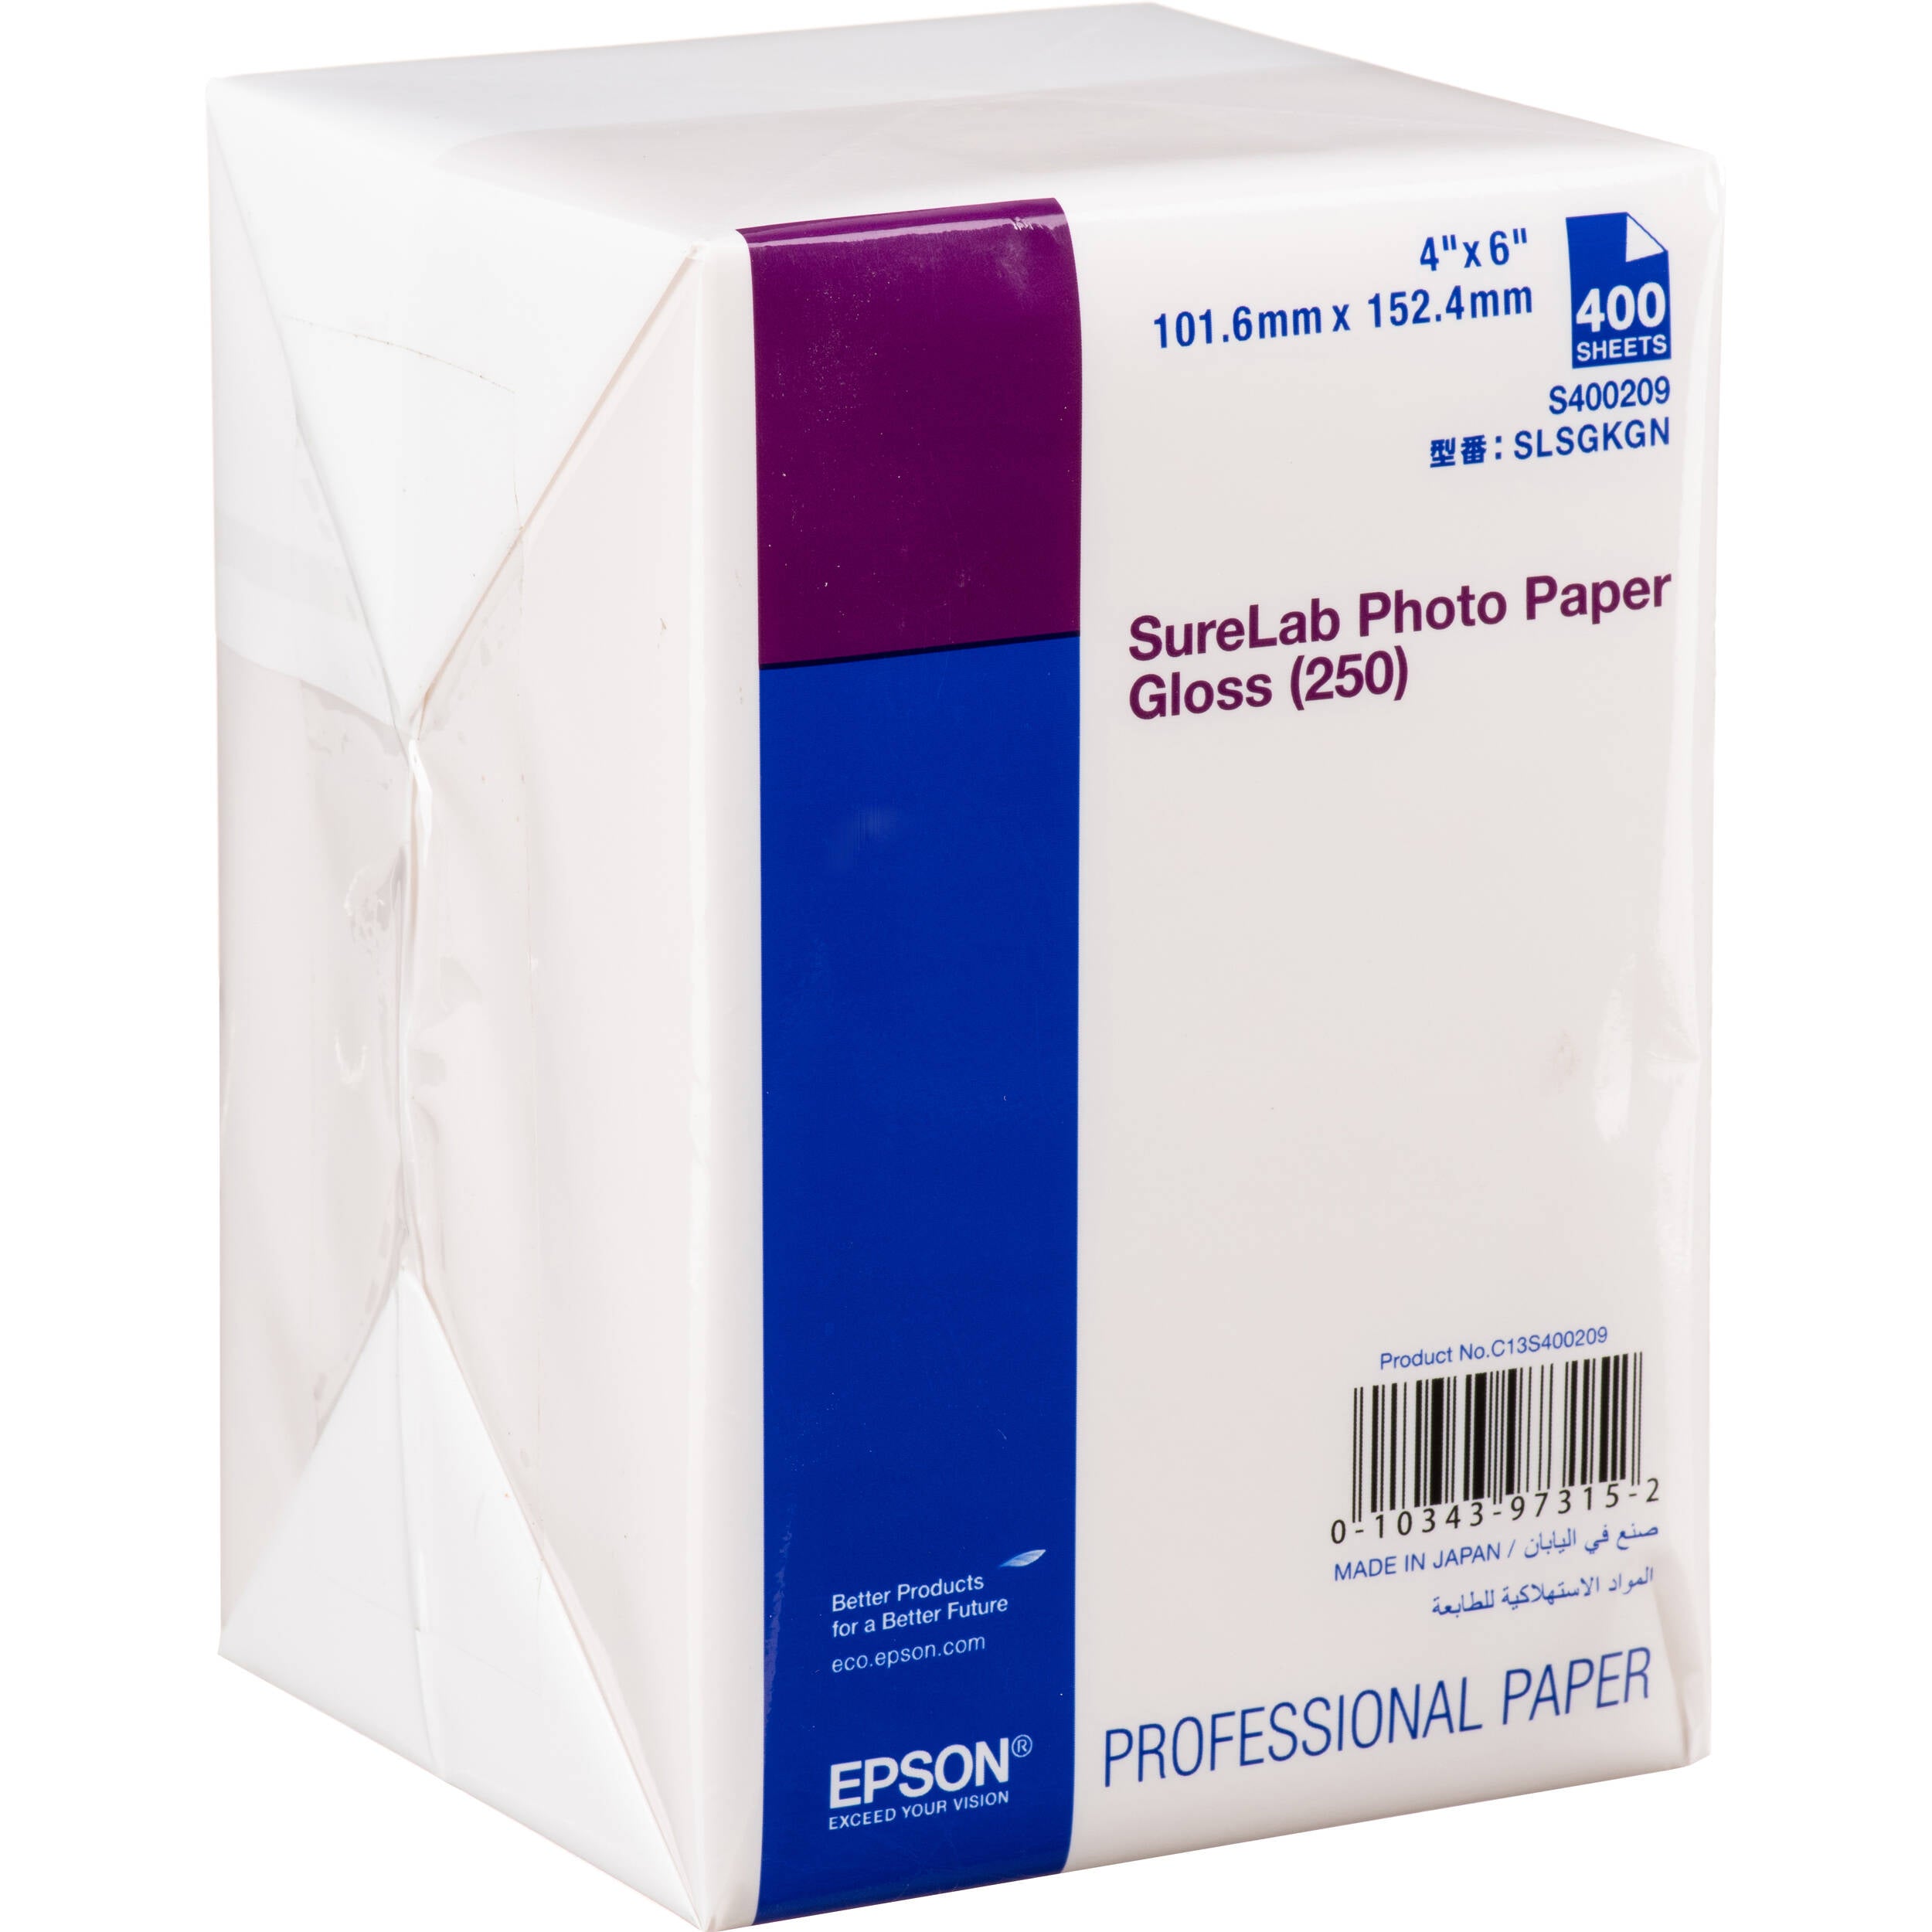 Epson SureLab Photo Paper Gloss (250) 10cmx15cm 400sheets